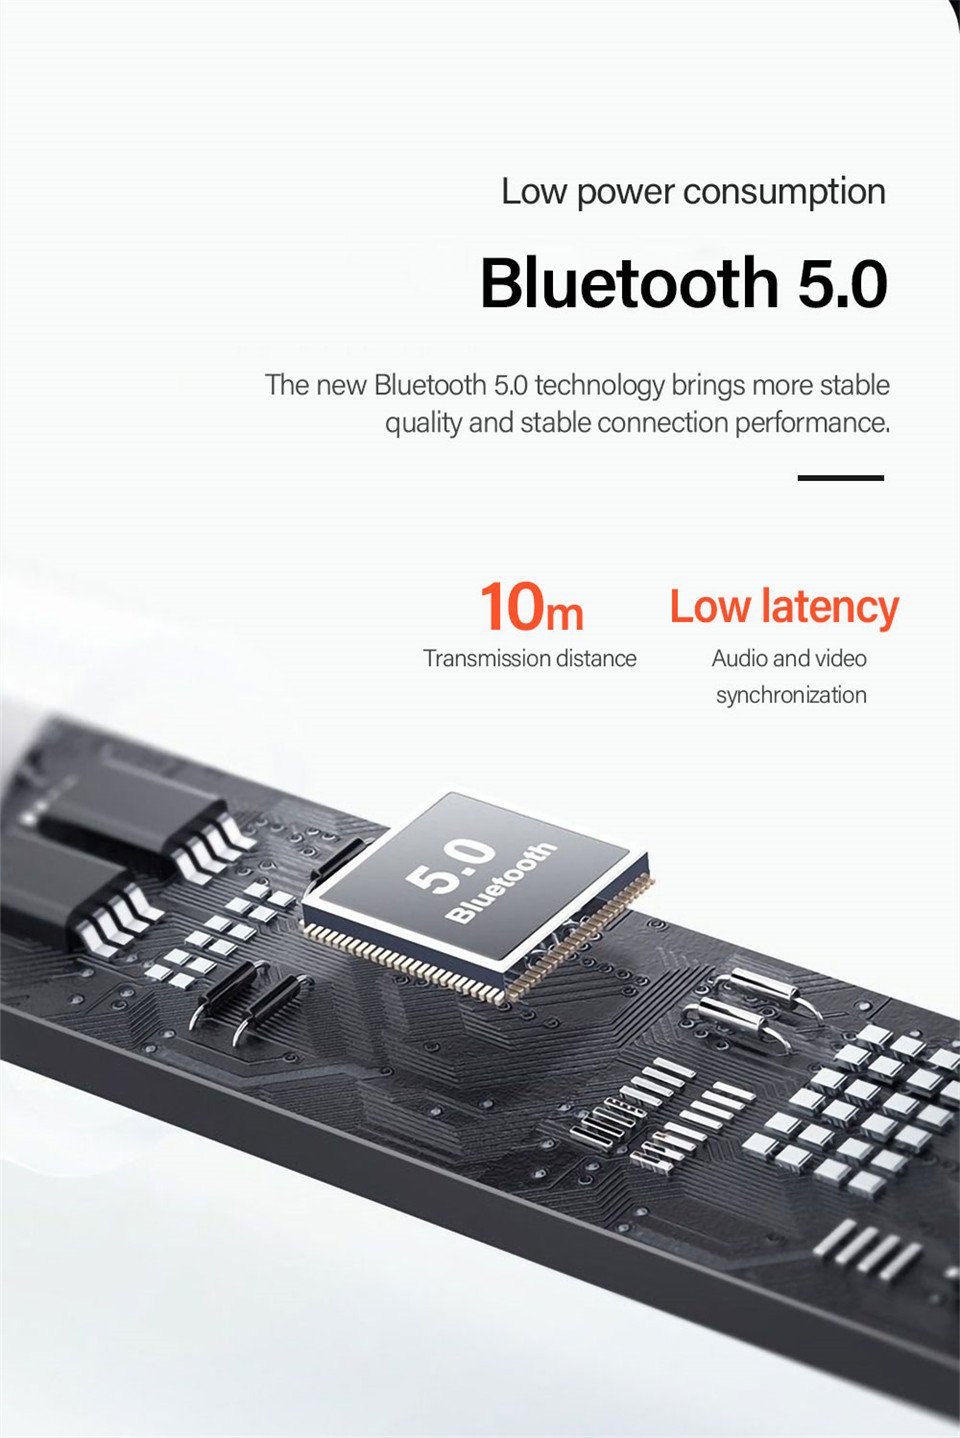 Lenovo LP5 Mini Bluetooth Earphone IPX5 Waterproof Wireless Earbuds for iPhone 13 Xiaomi Headphone With Dual Mic LP40 Upgraded